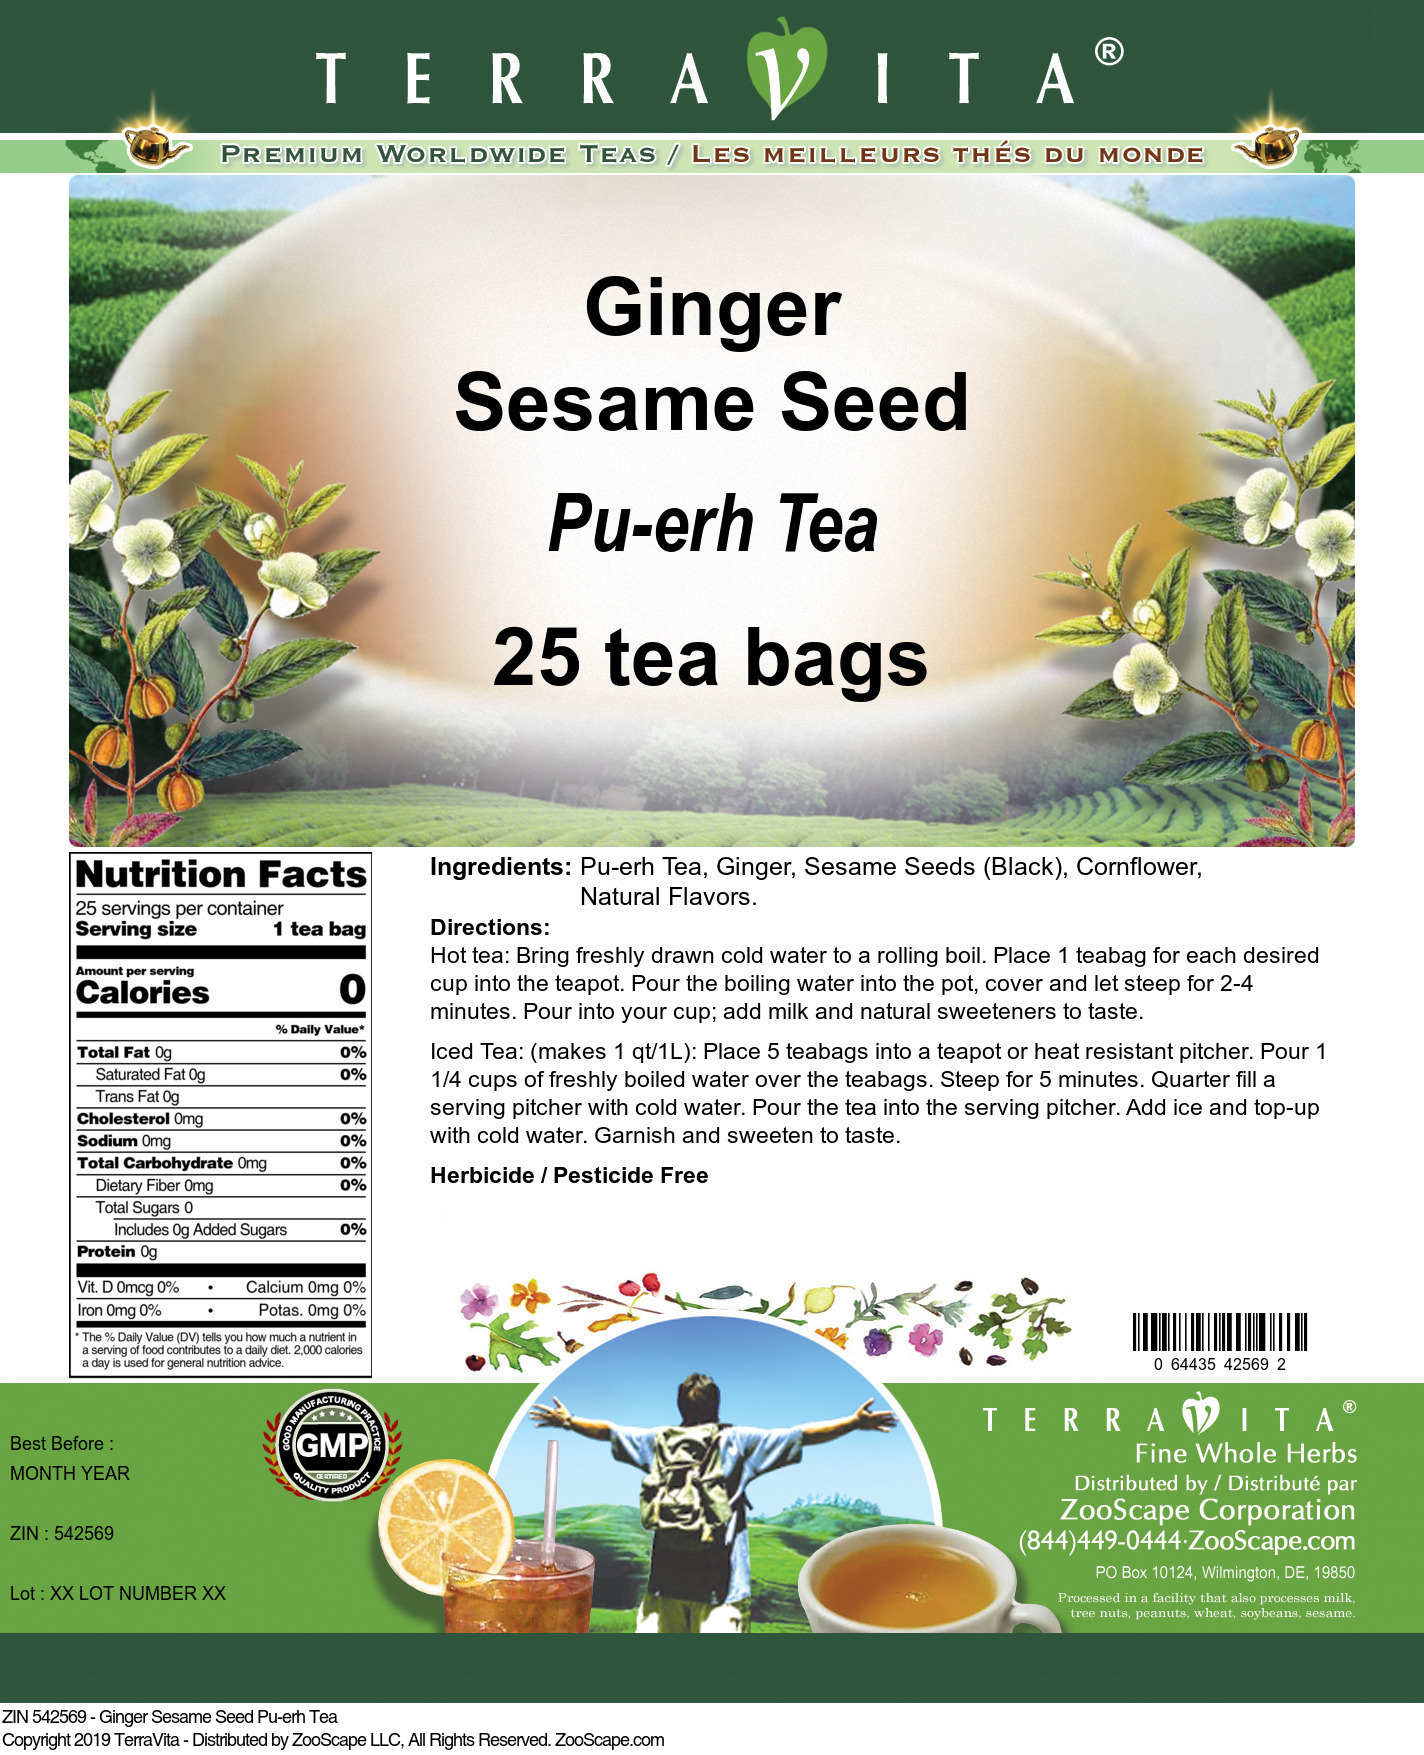 Ginger Sesame Seed Pu-erh Tea - Label